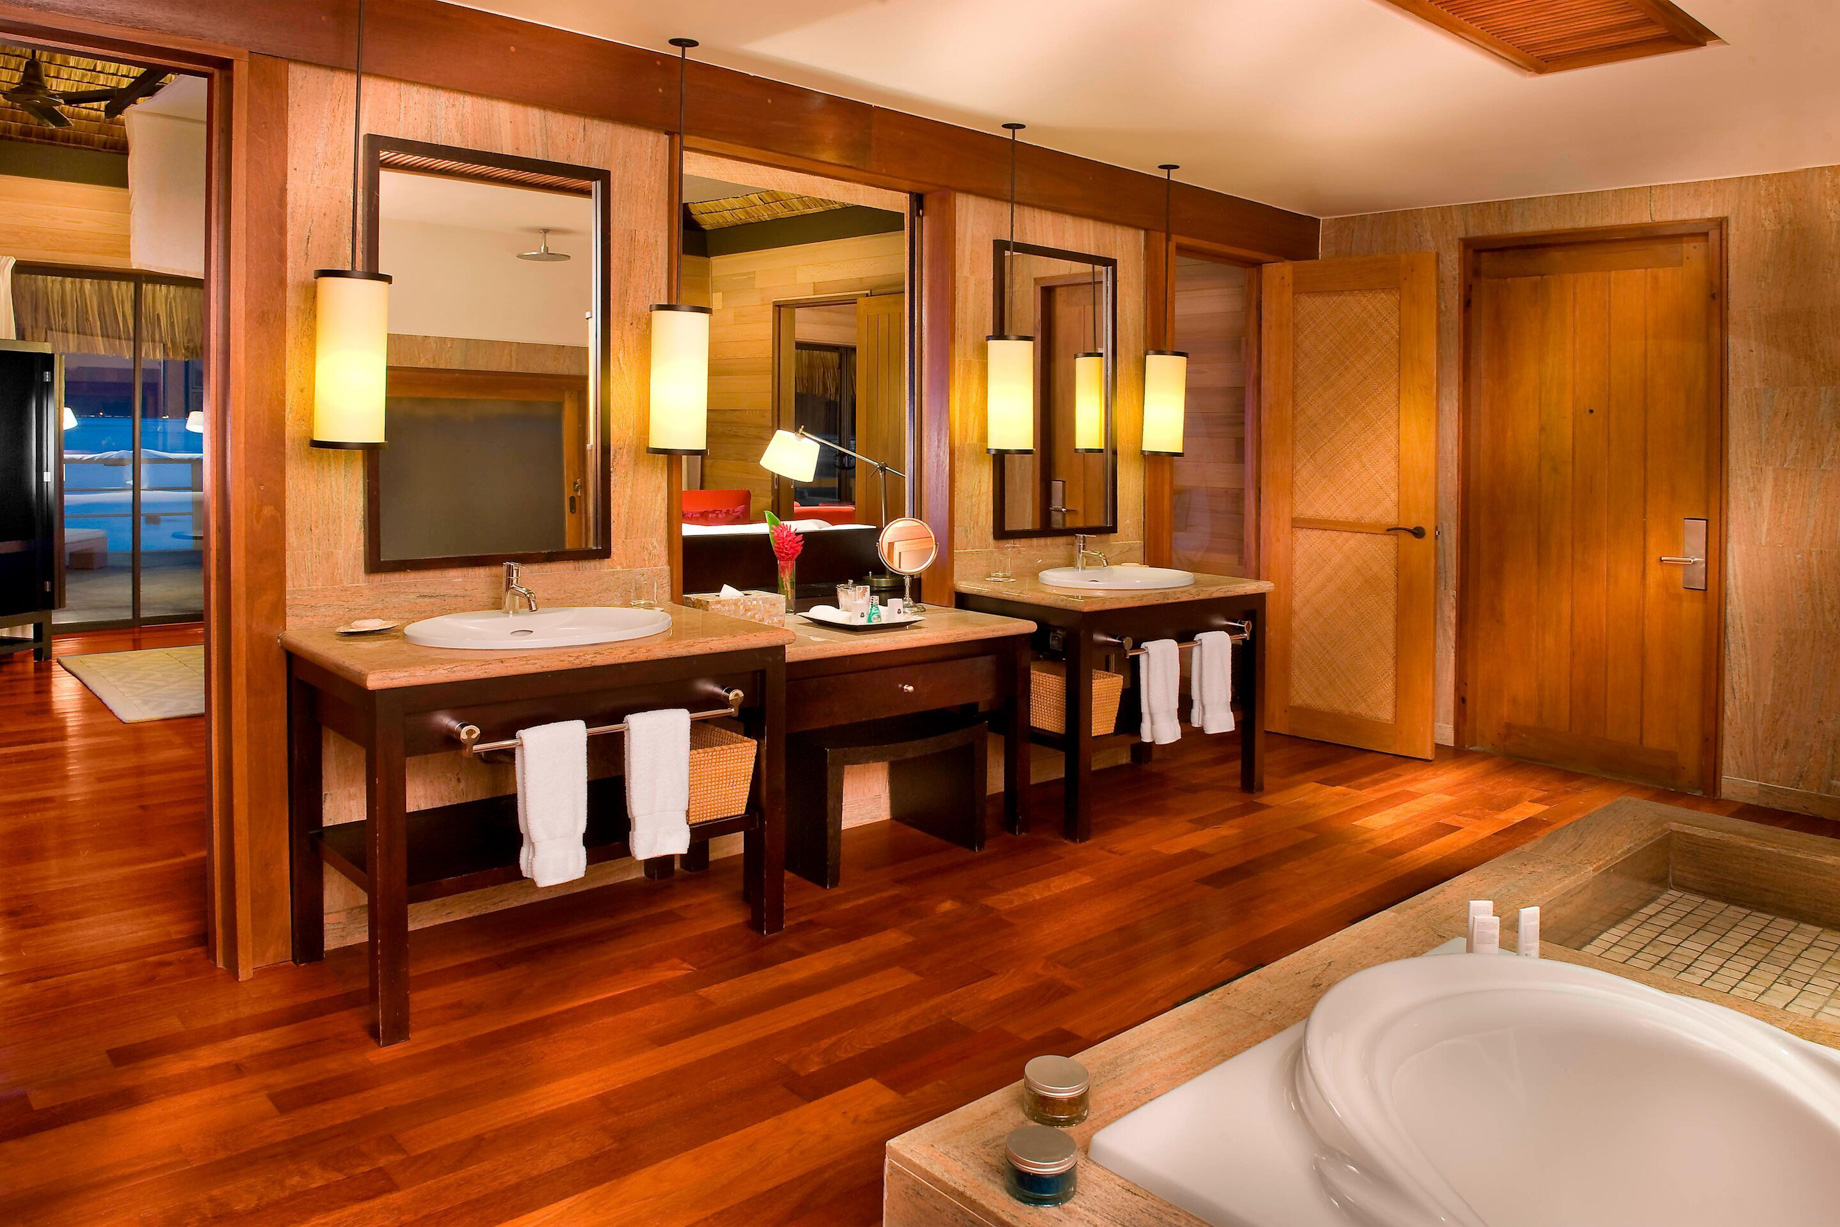 The St. Regis Bora Bora Resort - Bora Bora, French Polynesia - Guest Bathroom